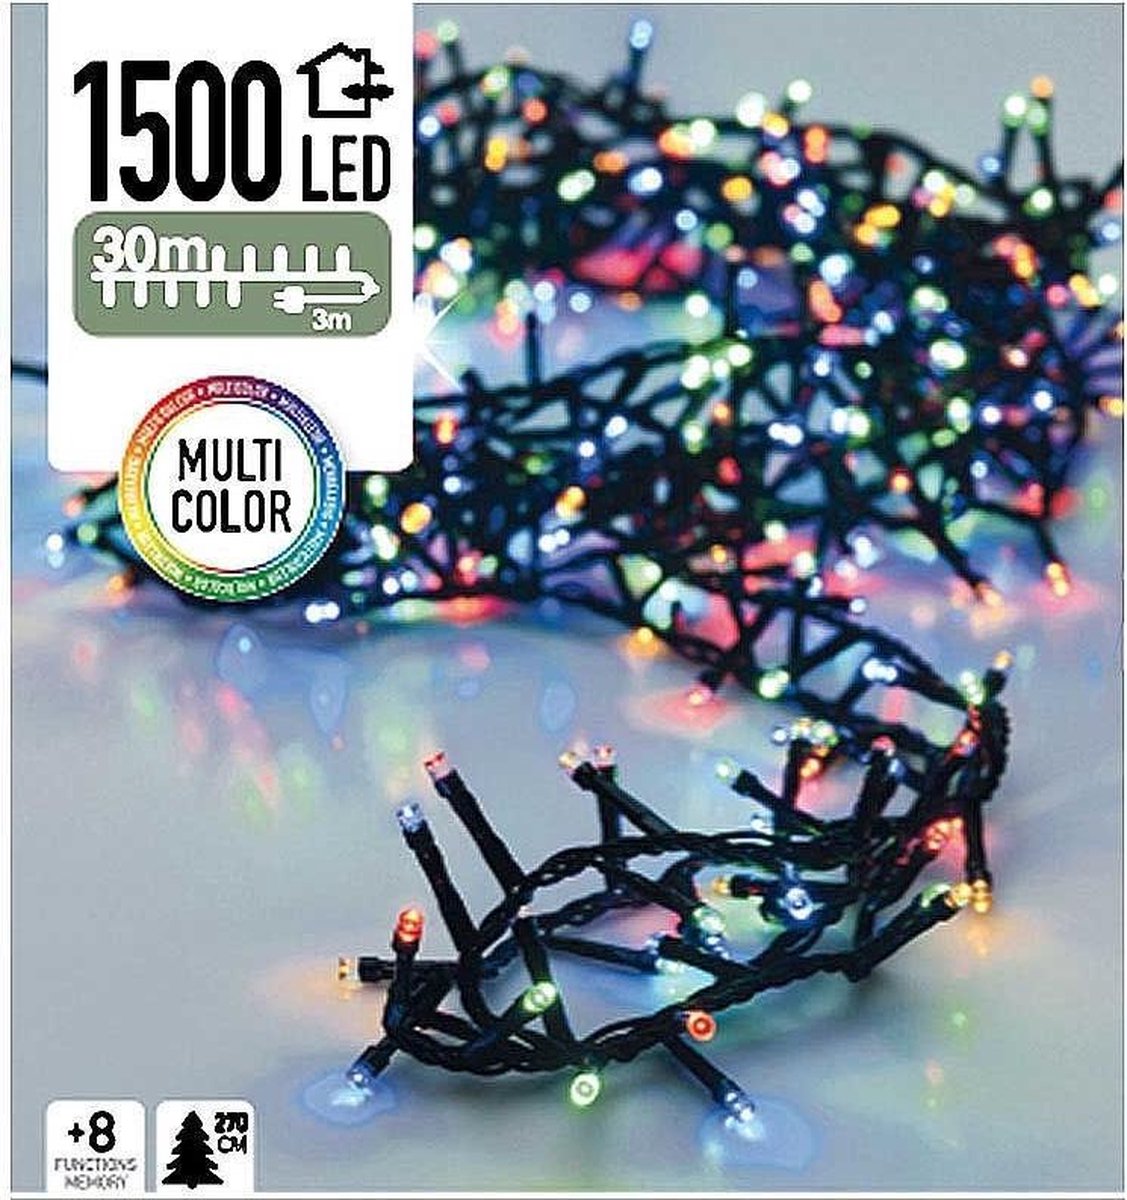 Nampook gekleurde kerstlampjes Microcluster